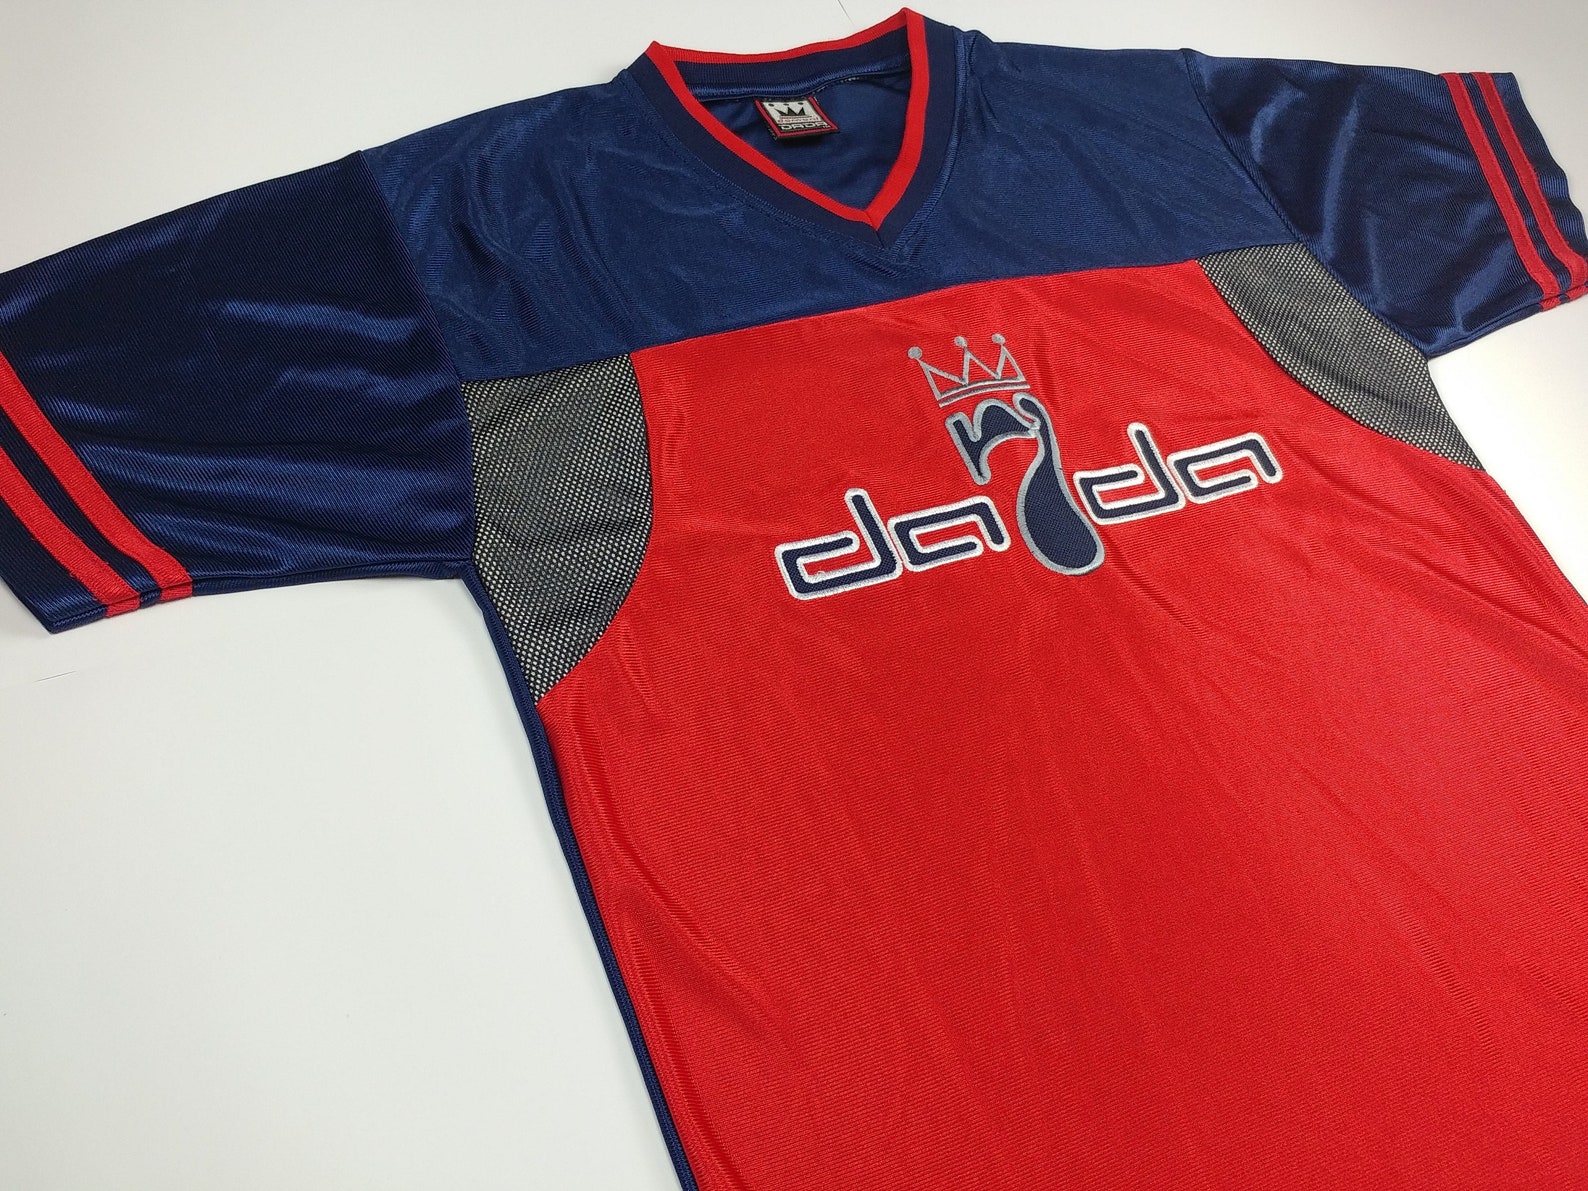 Damani Dada Supreme jersey red vintage hip-hop t-shirt 90s | Etsy